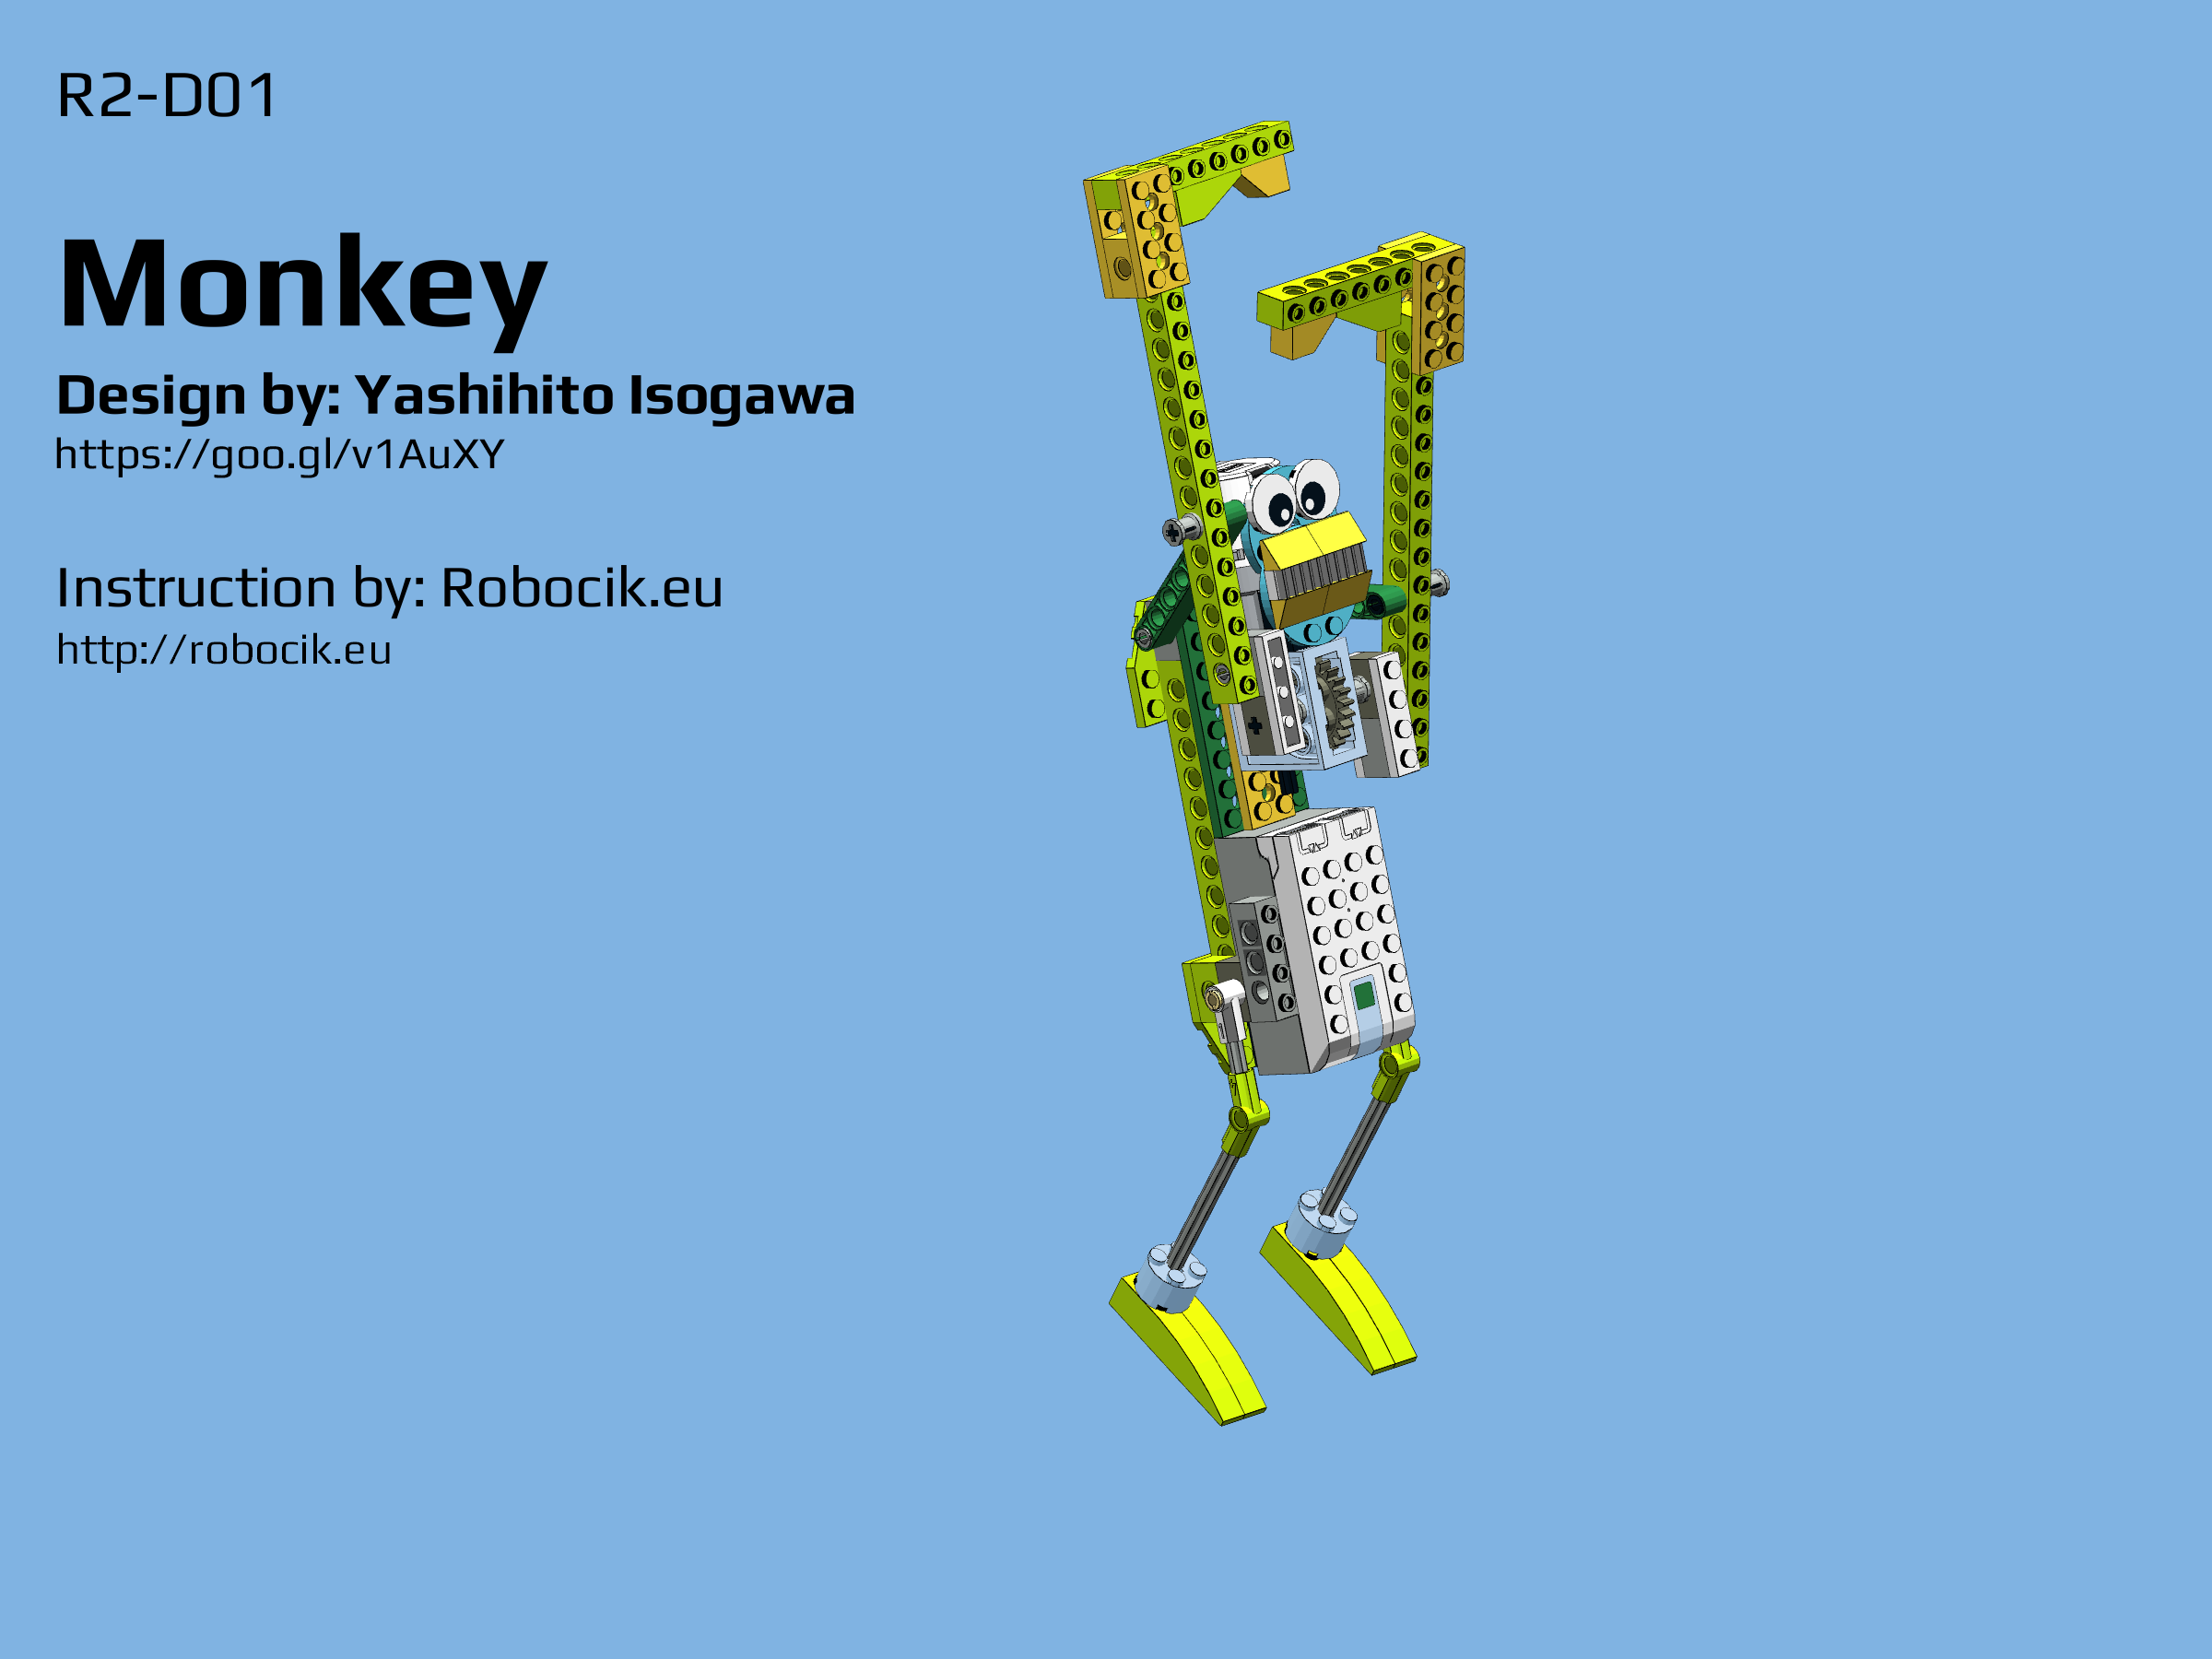 http://robocik.eu/pl/lego-wedo-20-monkey-by-yoshihito-isogawa/